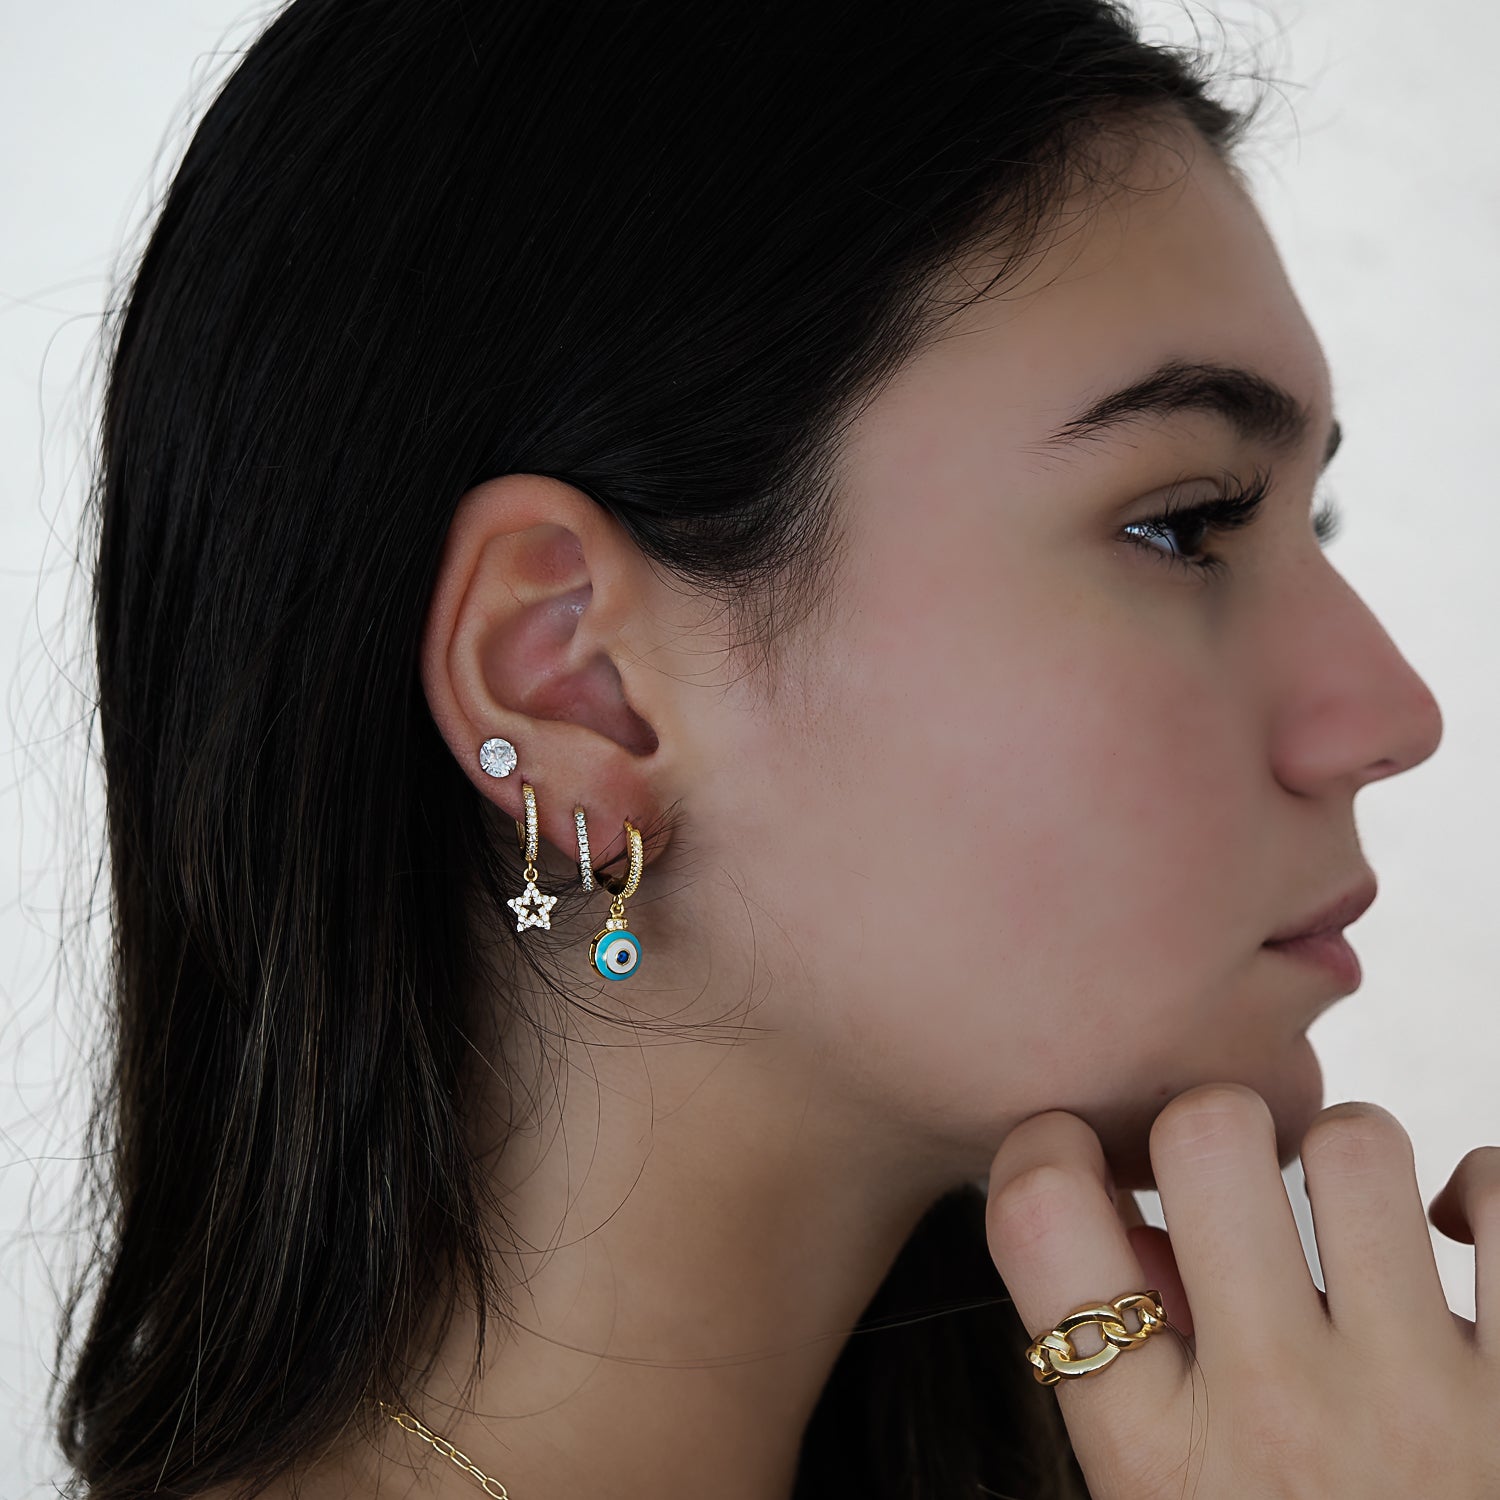 Model confidently showcasing the Turquoise Evil Eye Gold Earrings